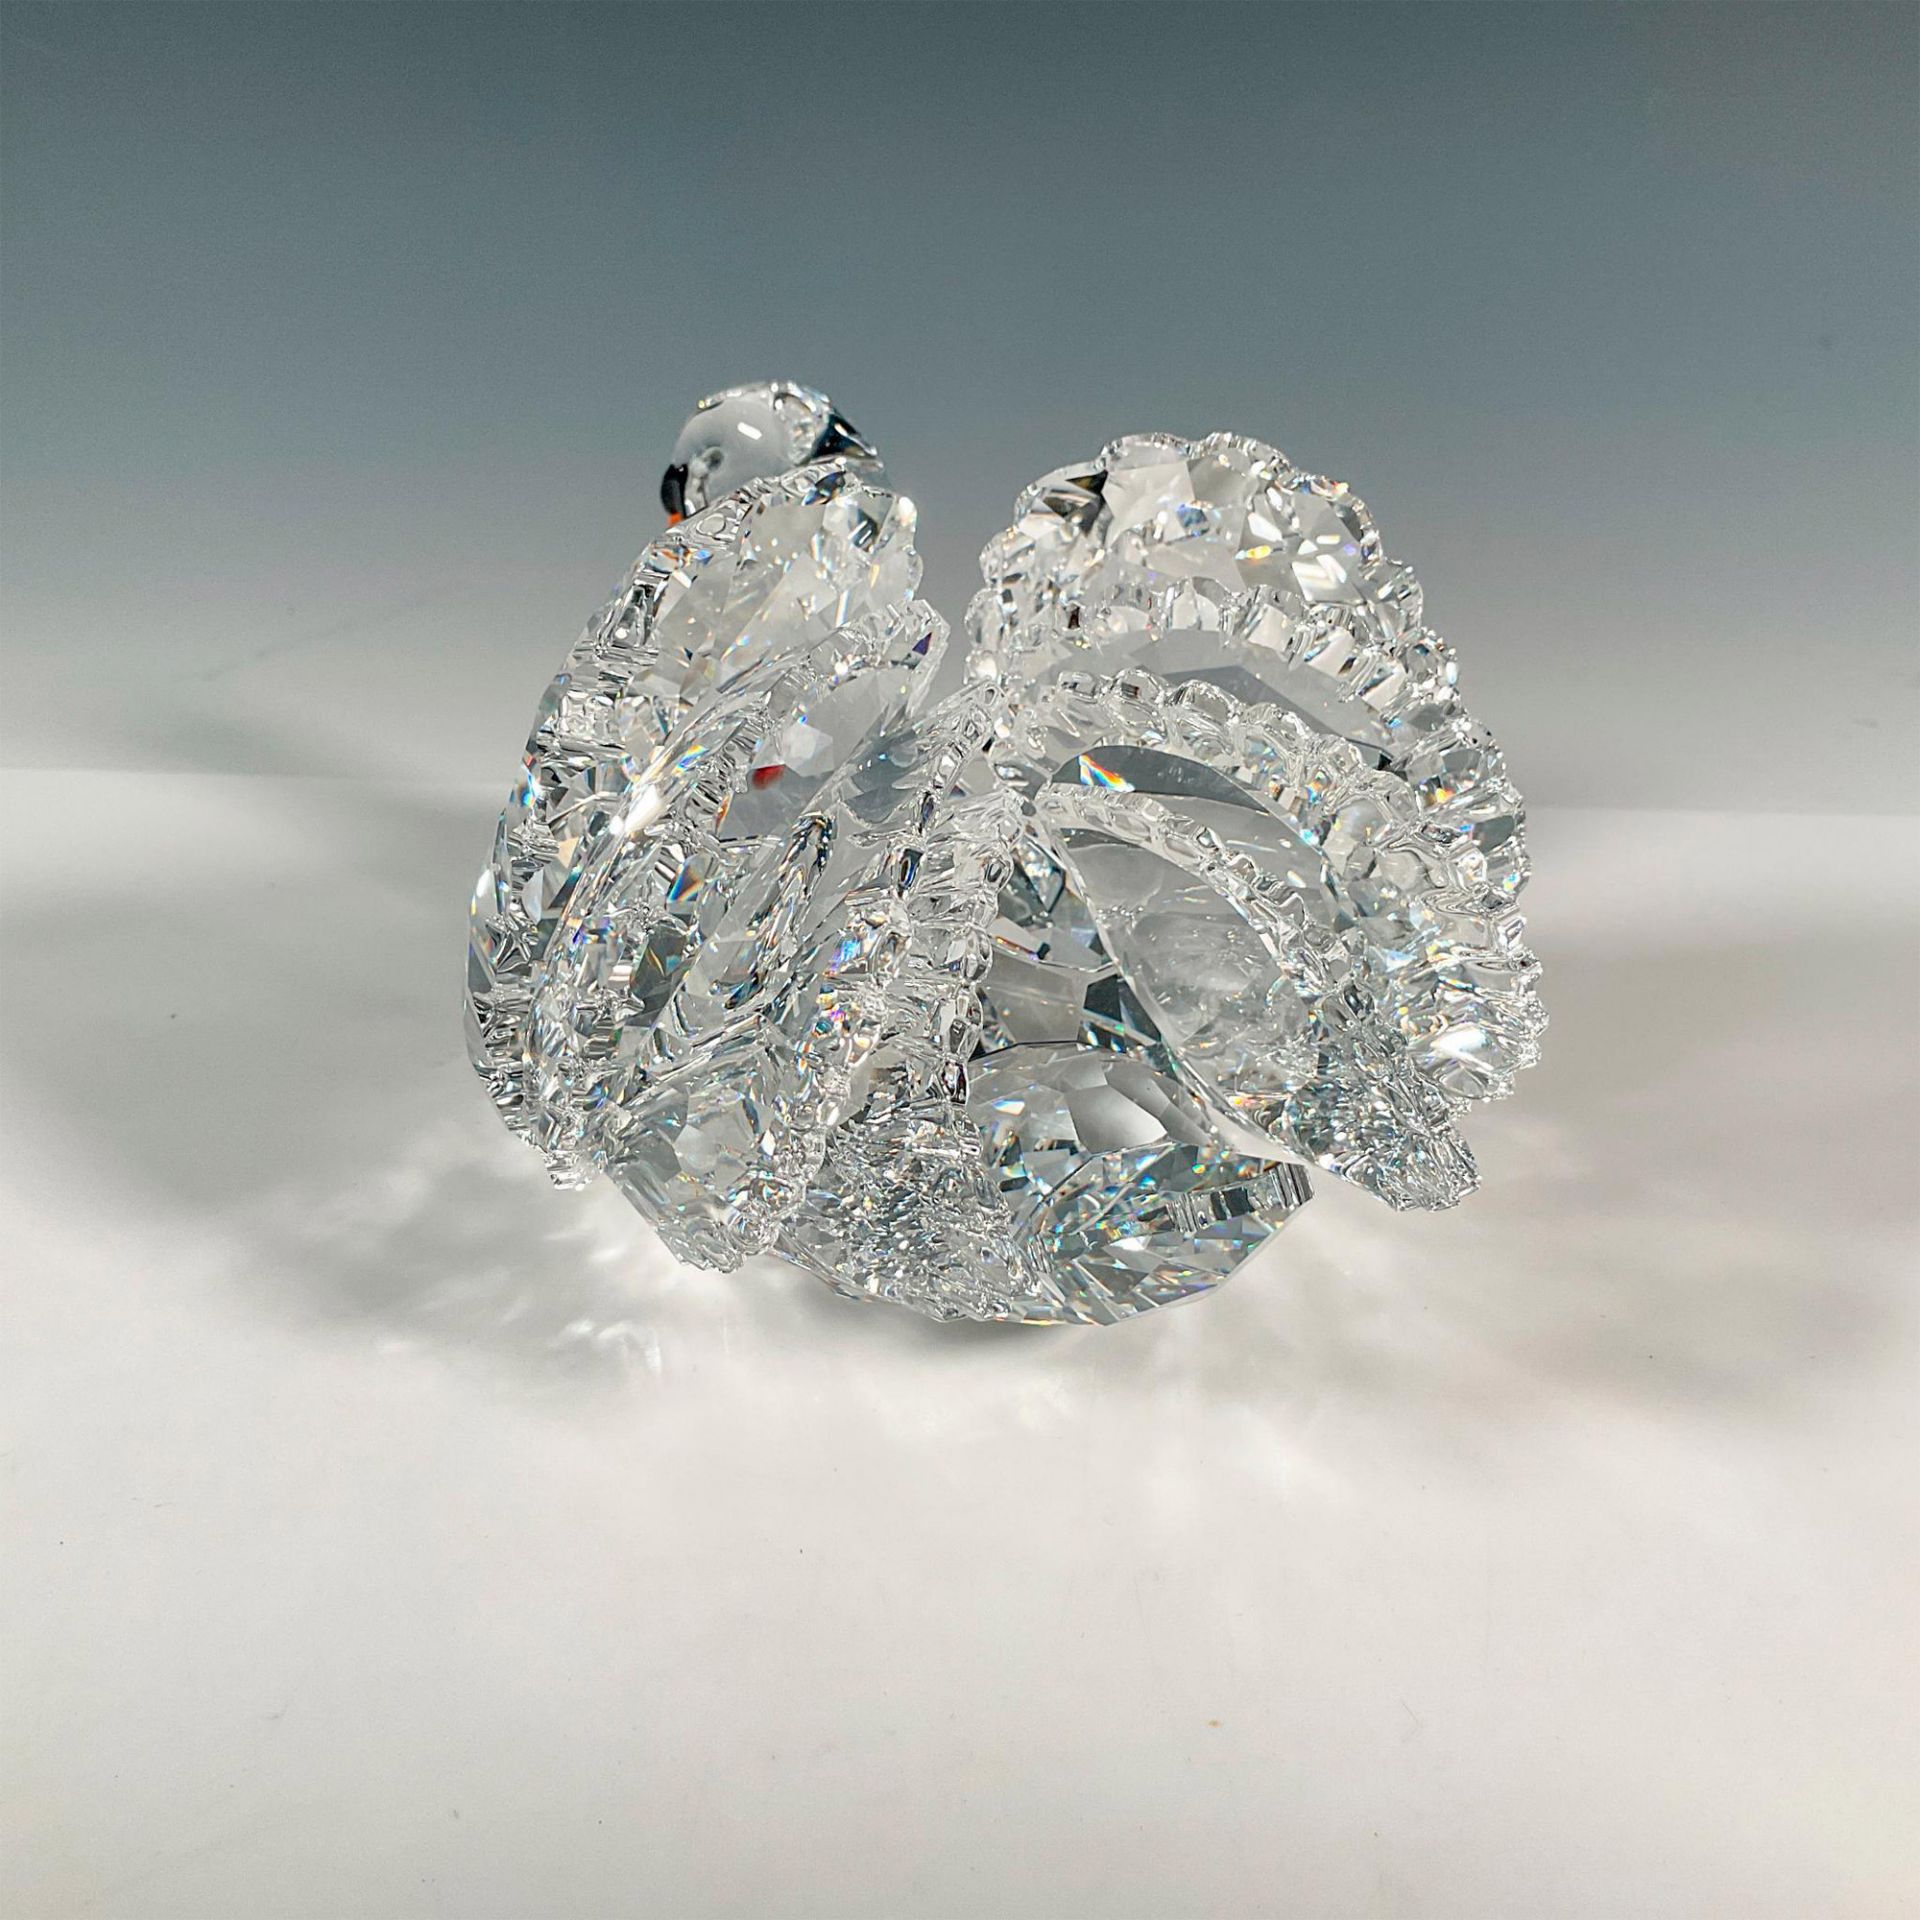 Swarovski Crystal Figurine, Graceful Swan - Image 2 of 4